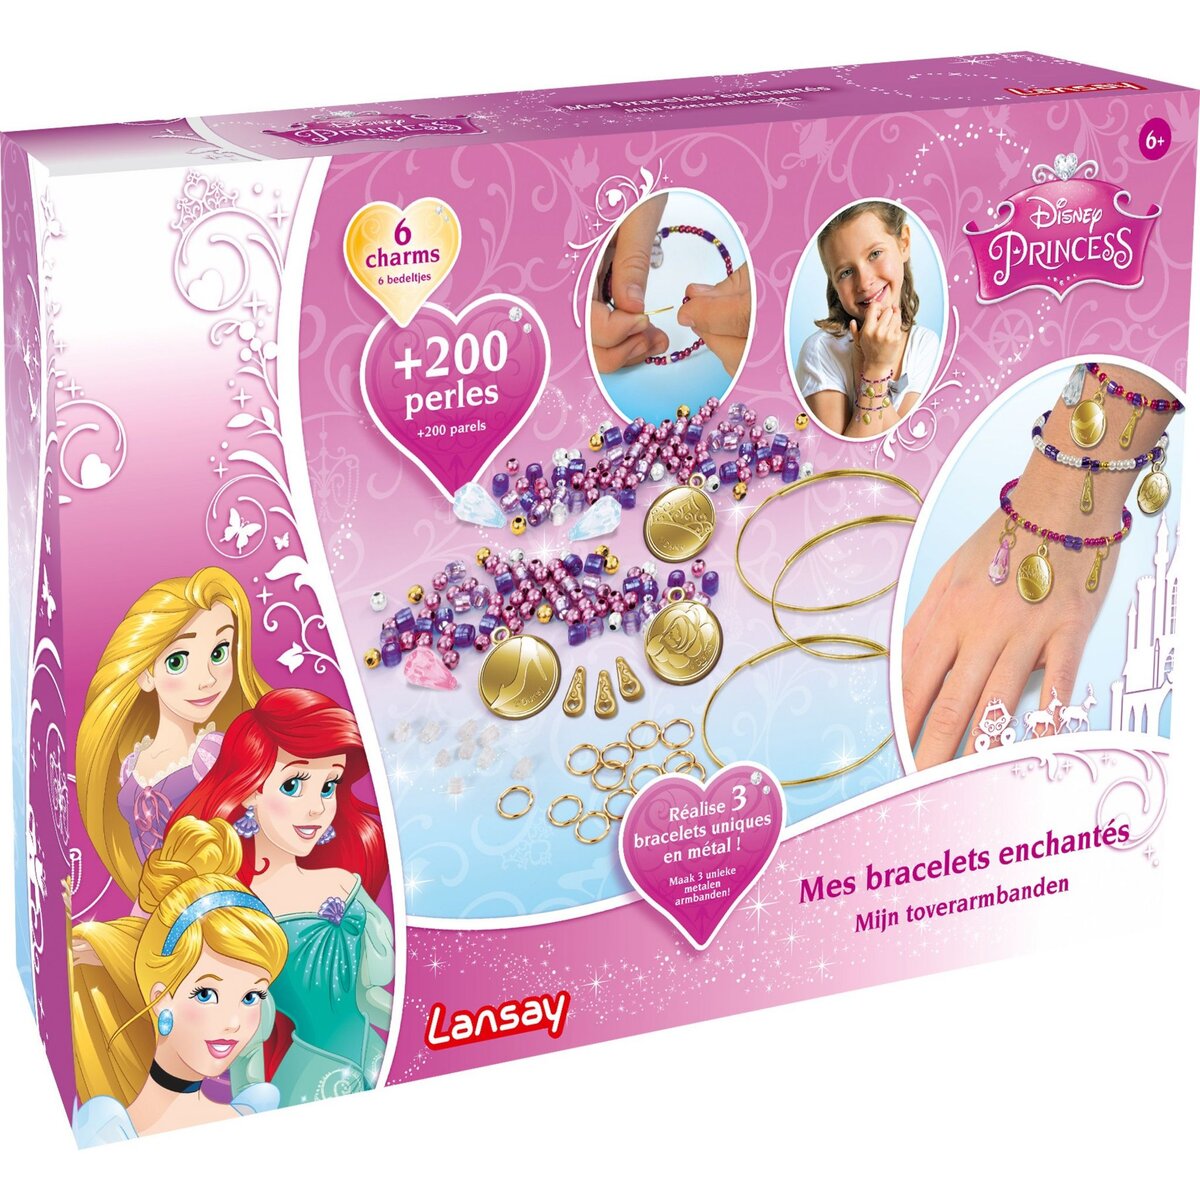 LANSAY Bracelets enchantés Disney Princesses